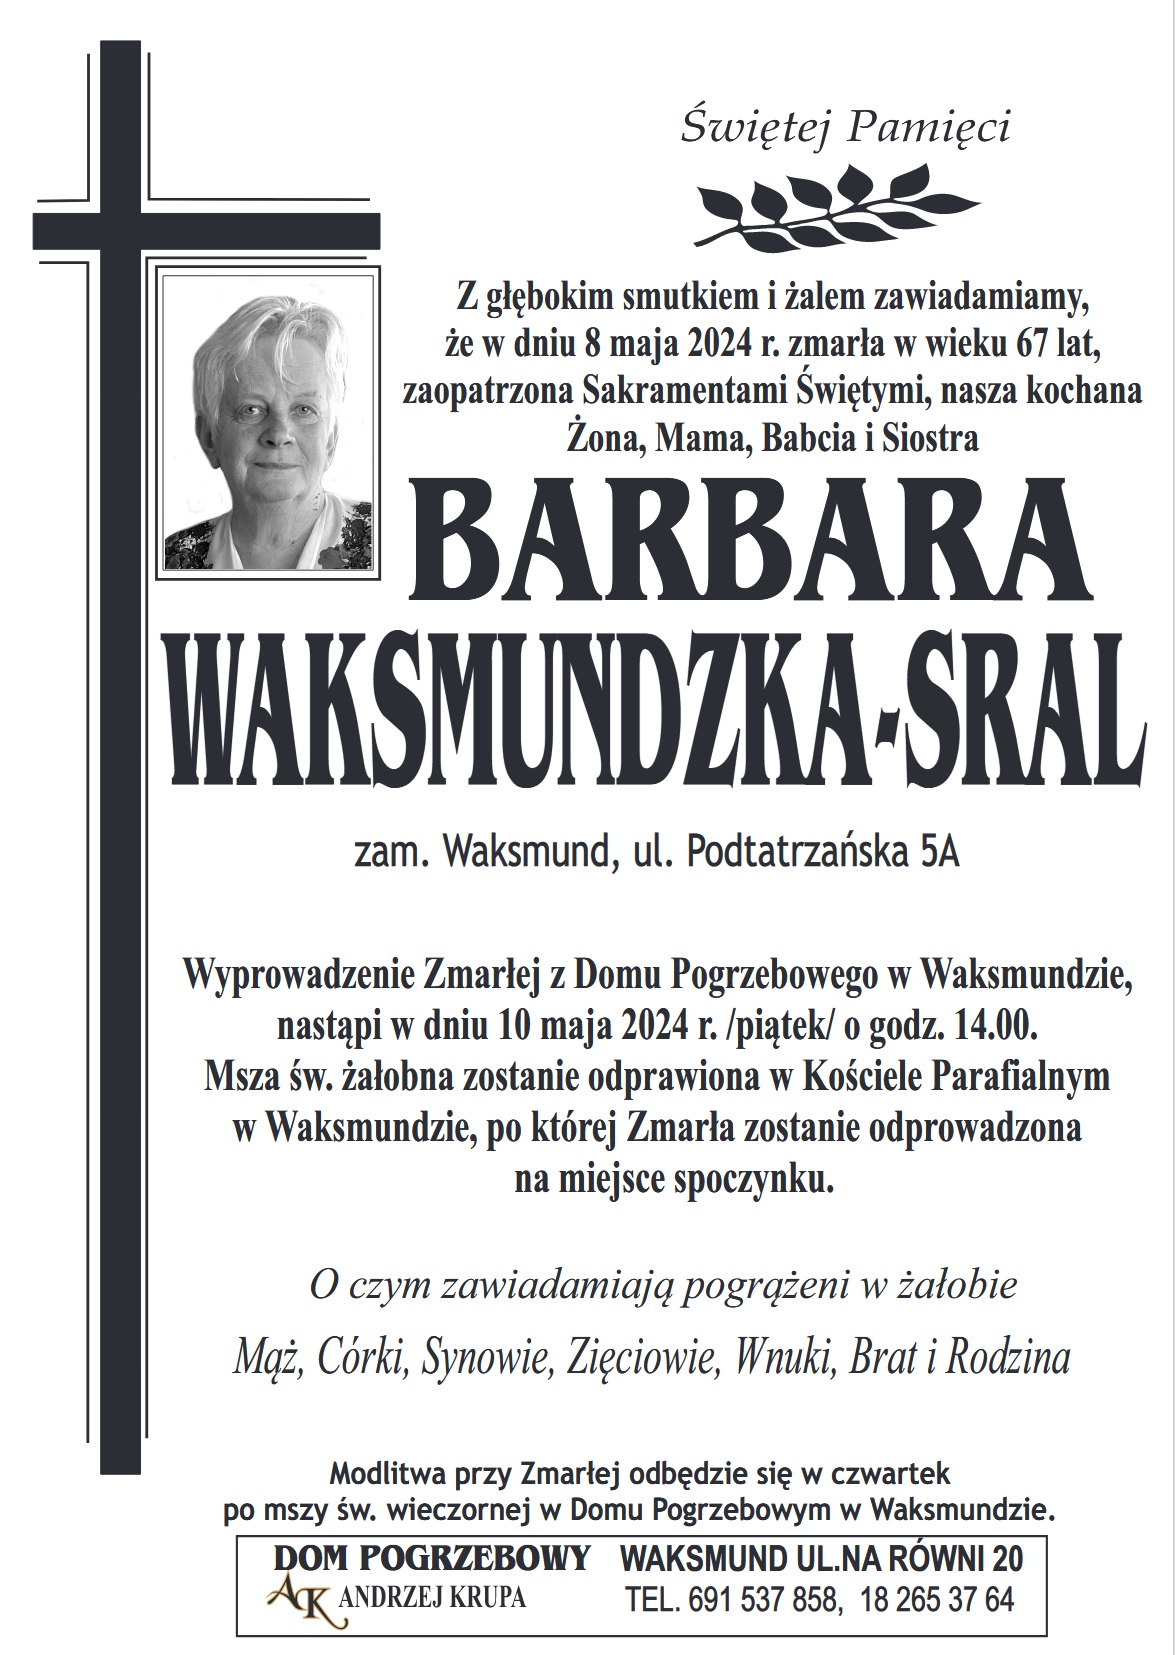 Barbara Waksmundzka-Sral